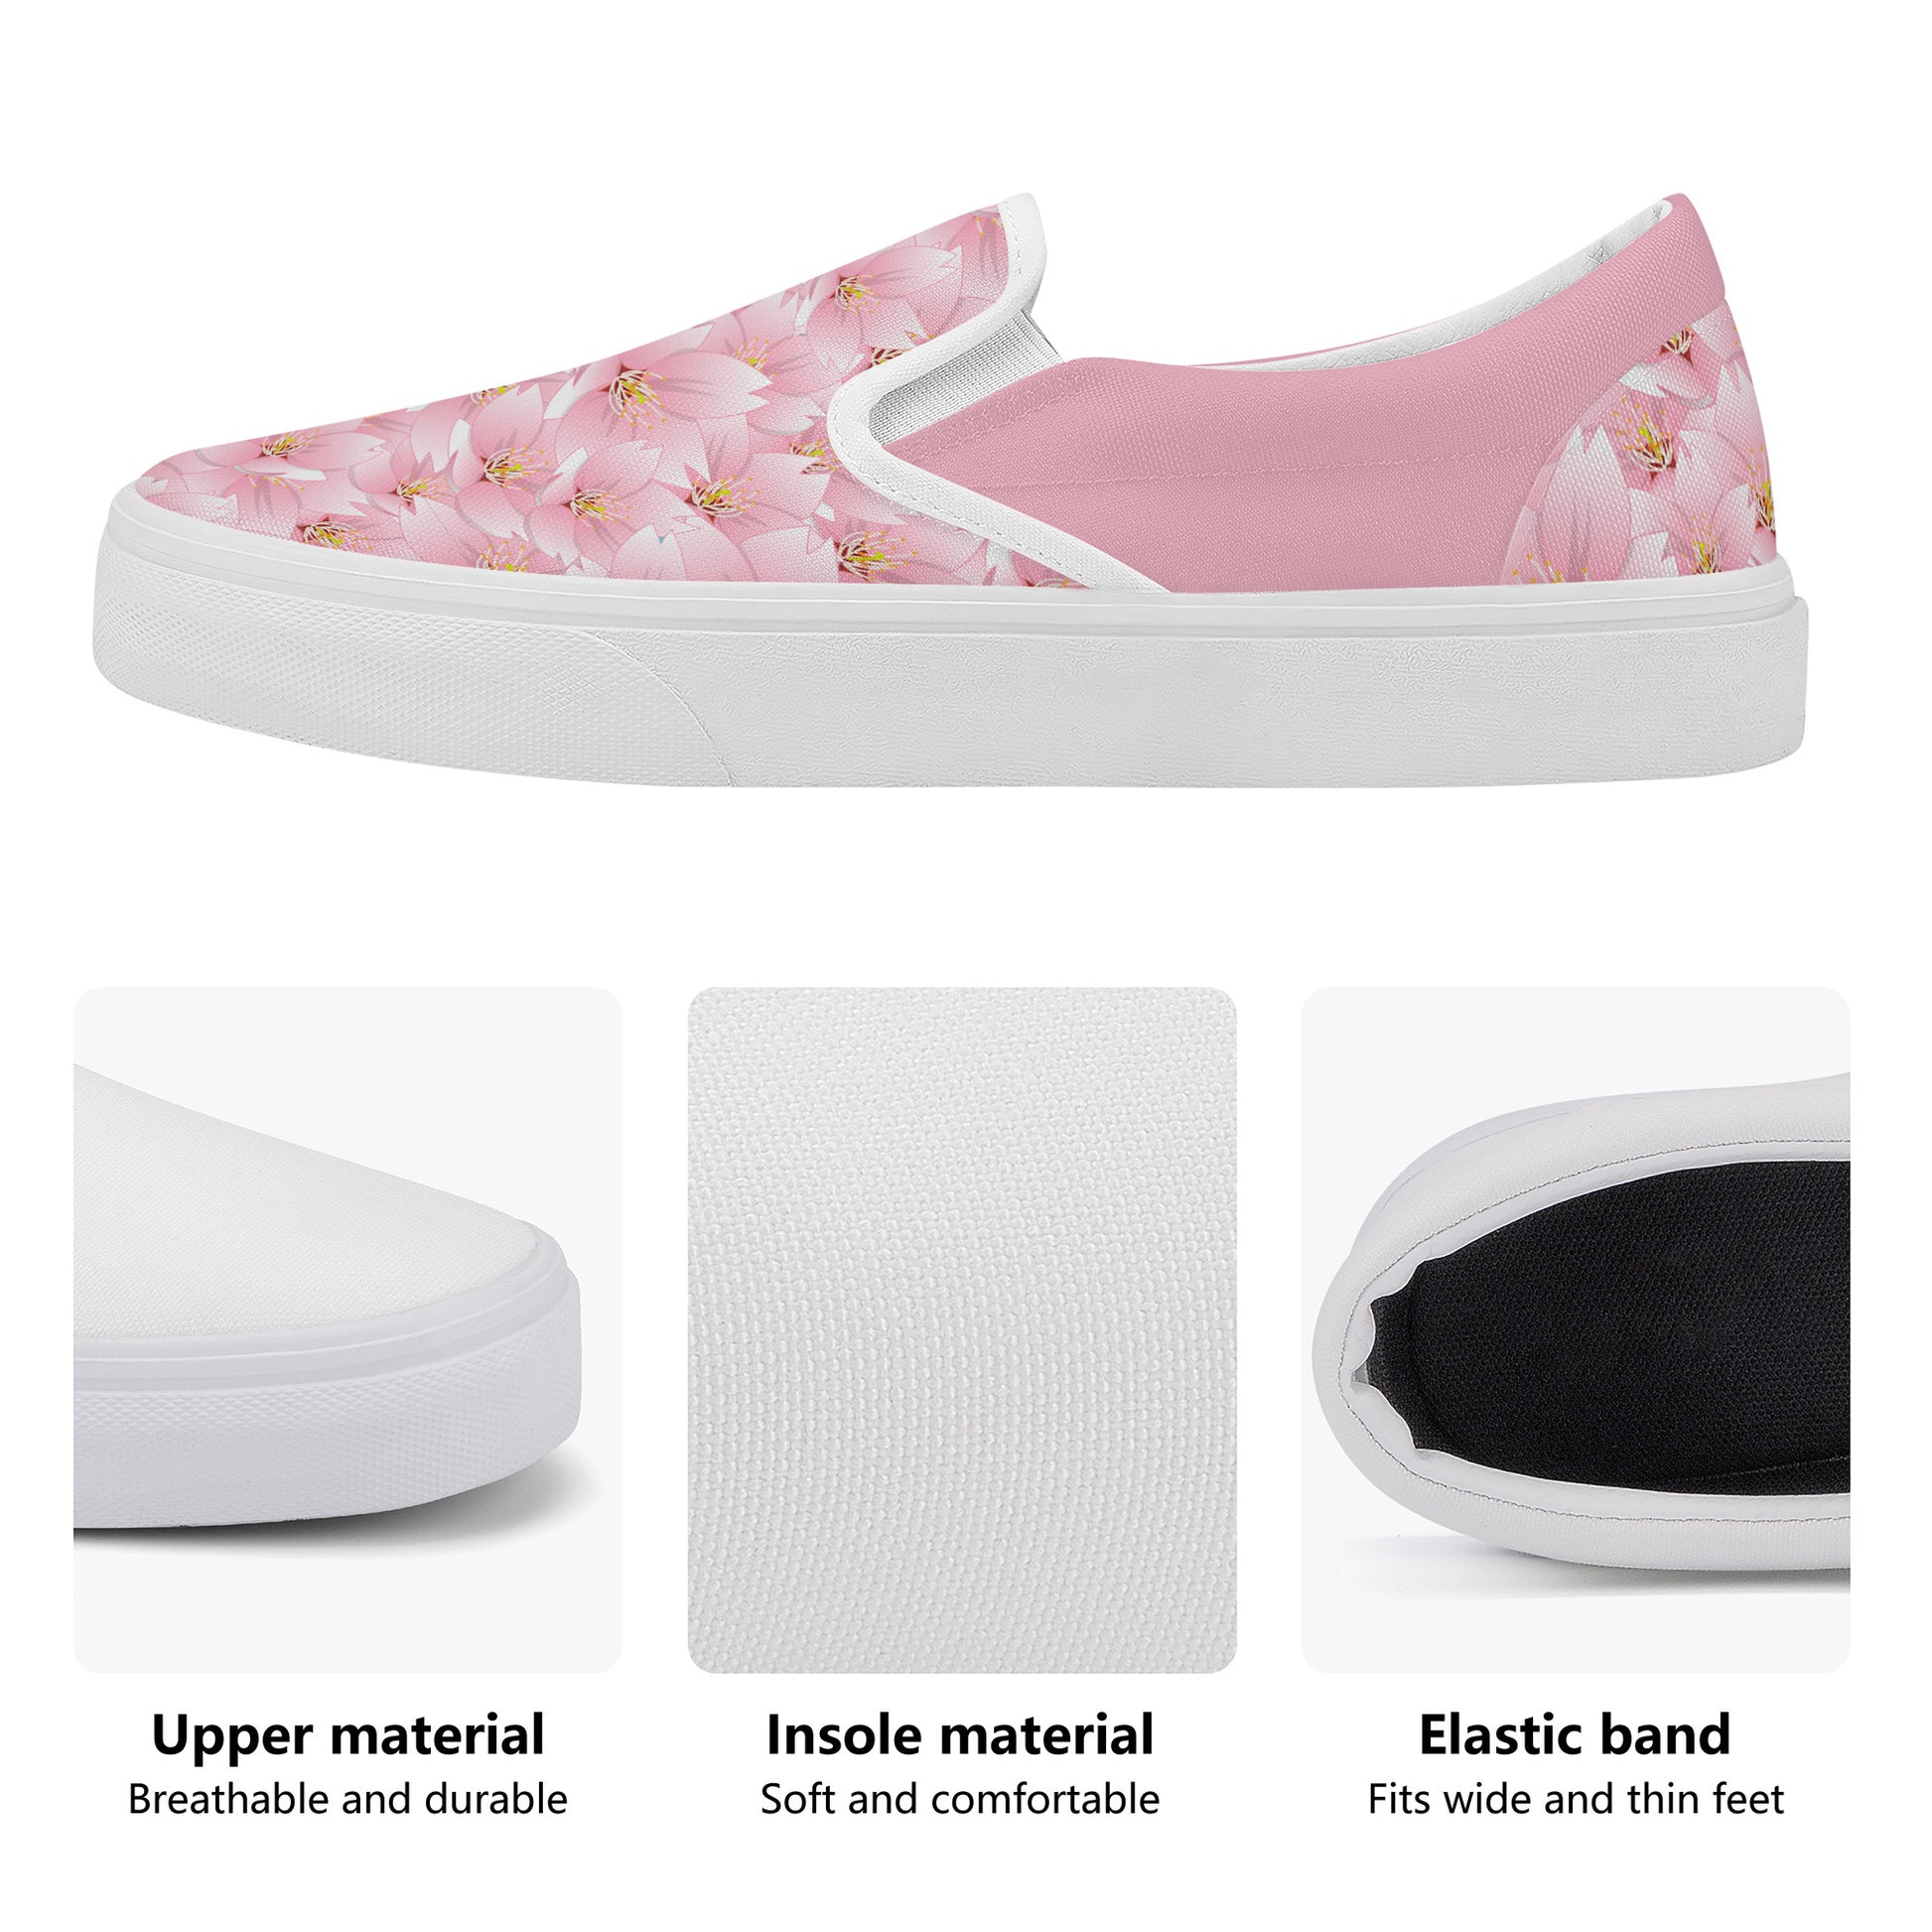 Pink Blossom Skate Slip On Shoes